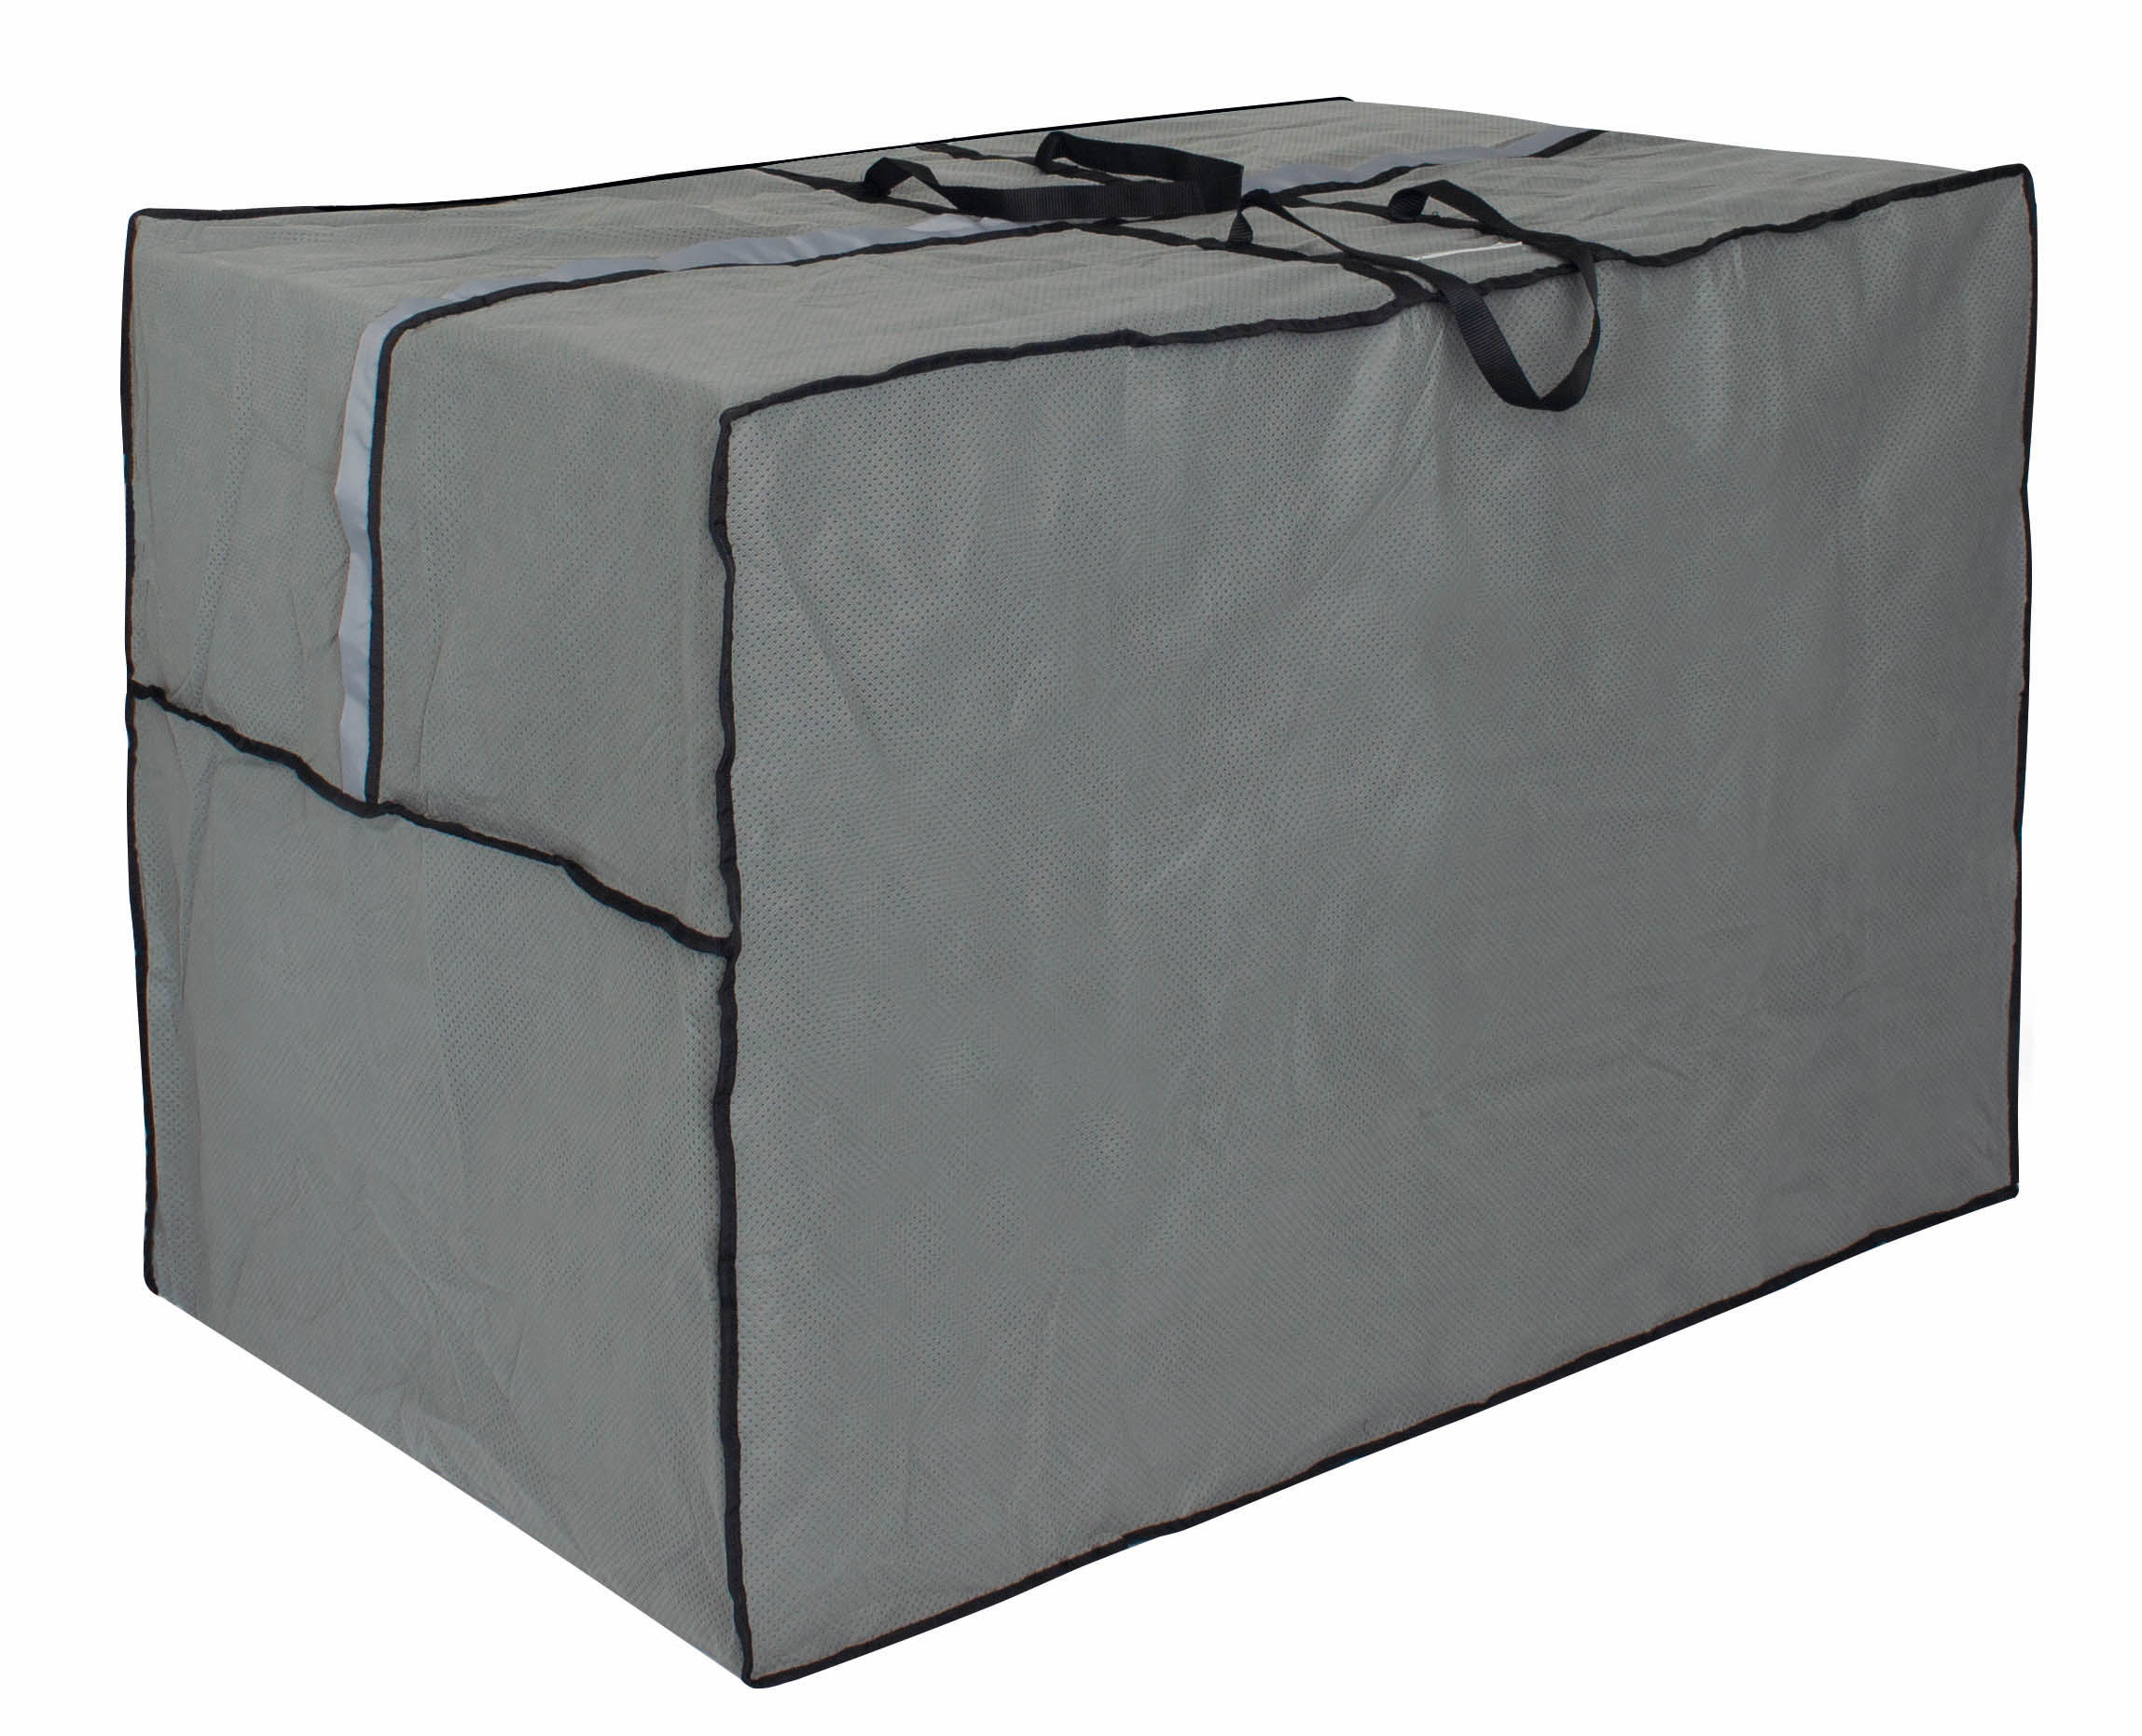 Lounge cushion protection bag 175 x 80 H: 80 cm